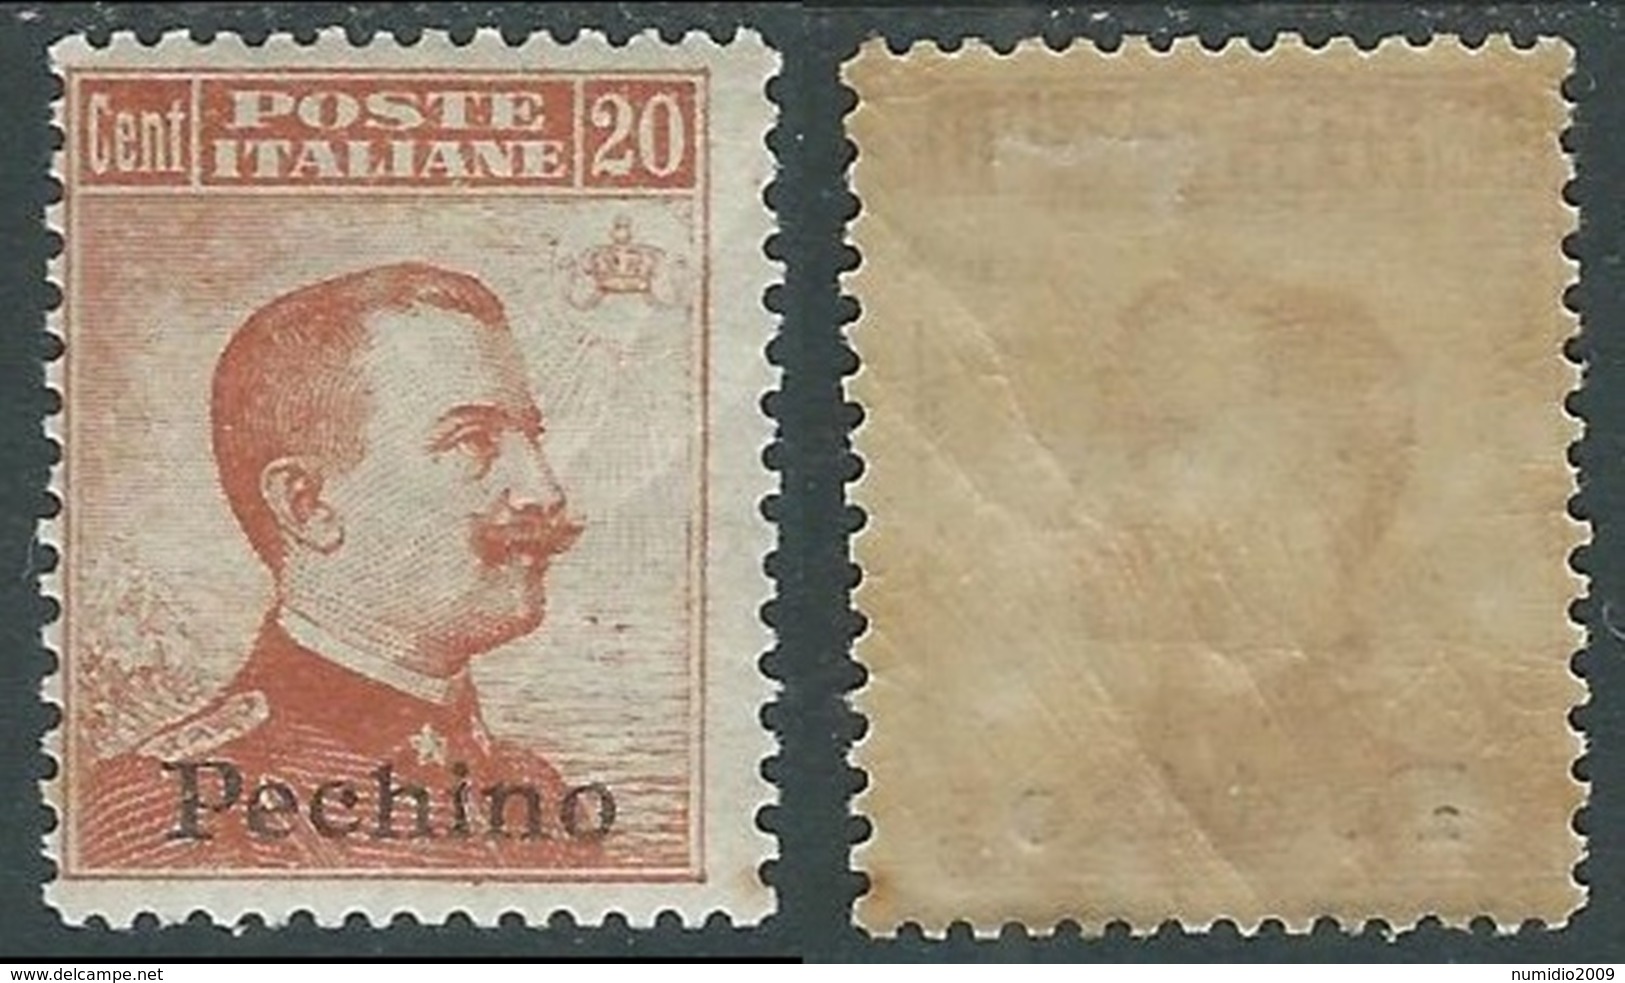 1917-18 CINA PECHINO EFFIGIE 20 CENT MH * - RA9-6 - Pékin